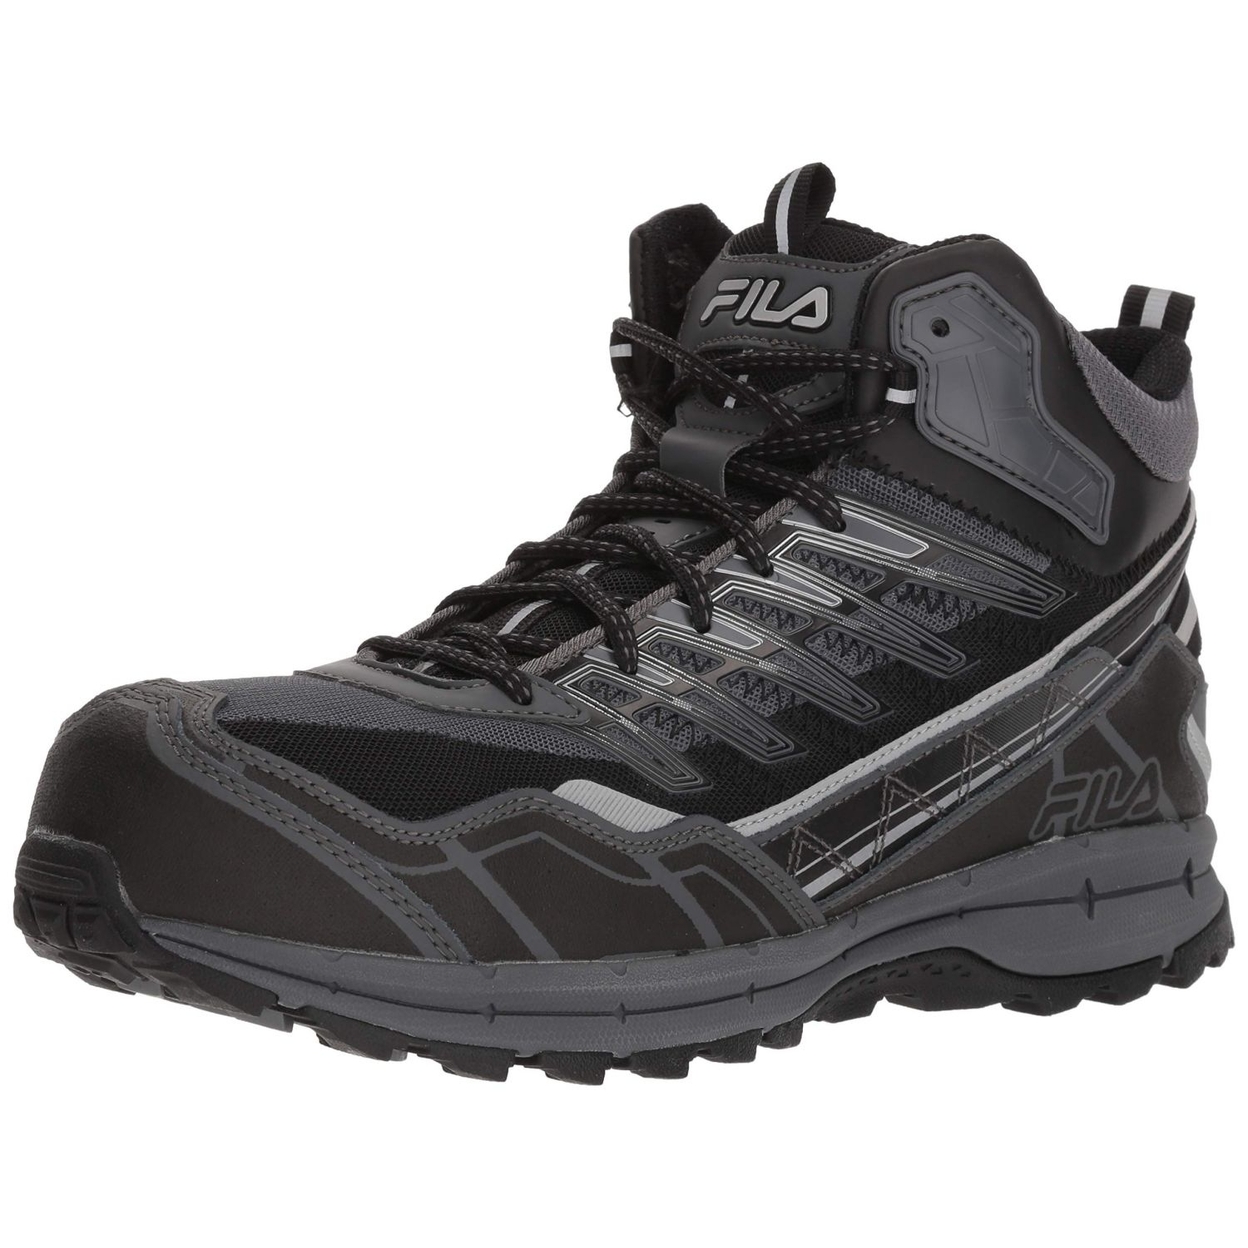 Fila Men's Hail Storm 3 Mid Composite Toe Trail Work Shoes Ct CSRK/BLK/MSIL - CSRK/BLK/MSIL, 12 Women/9.5 Men